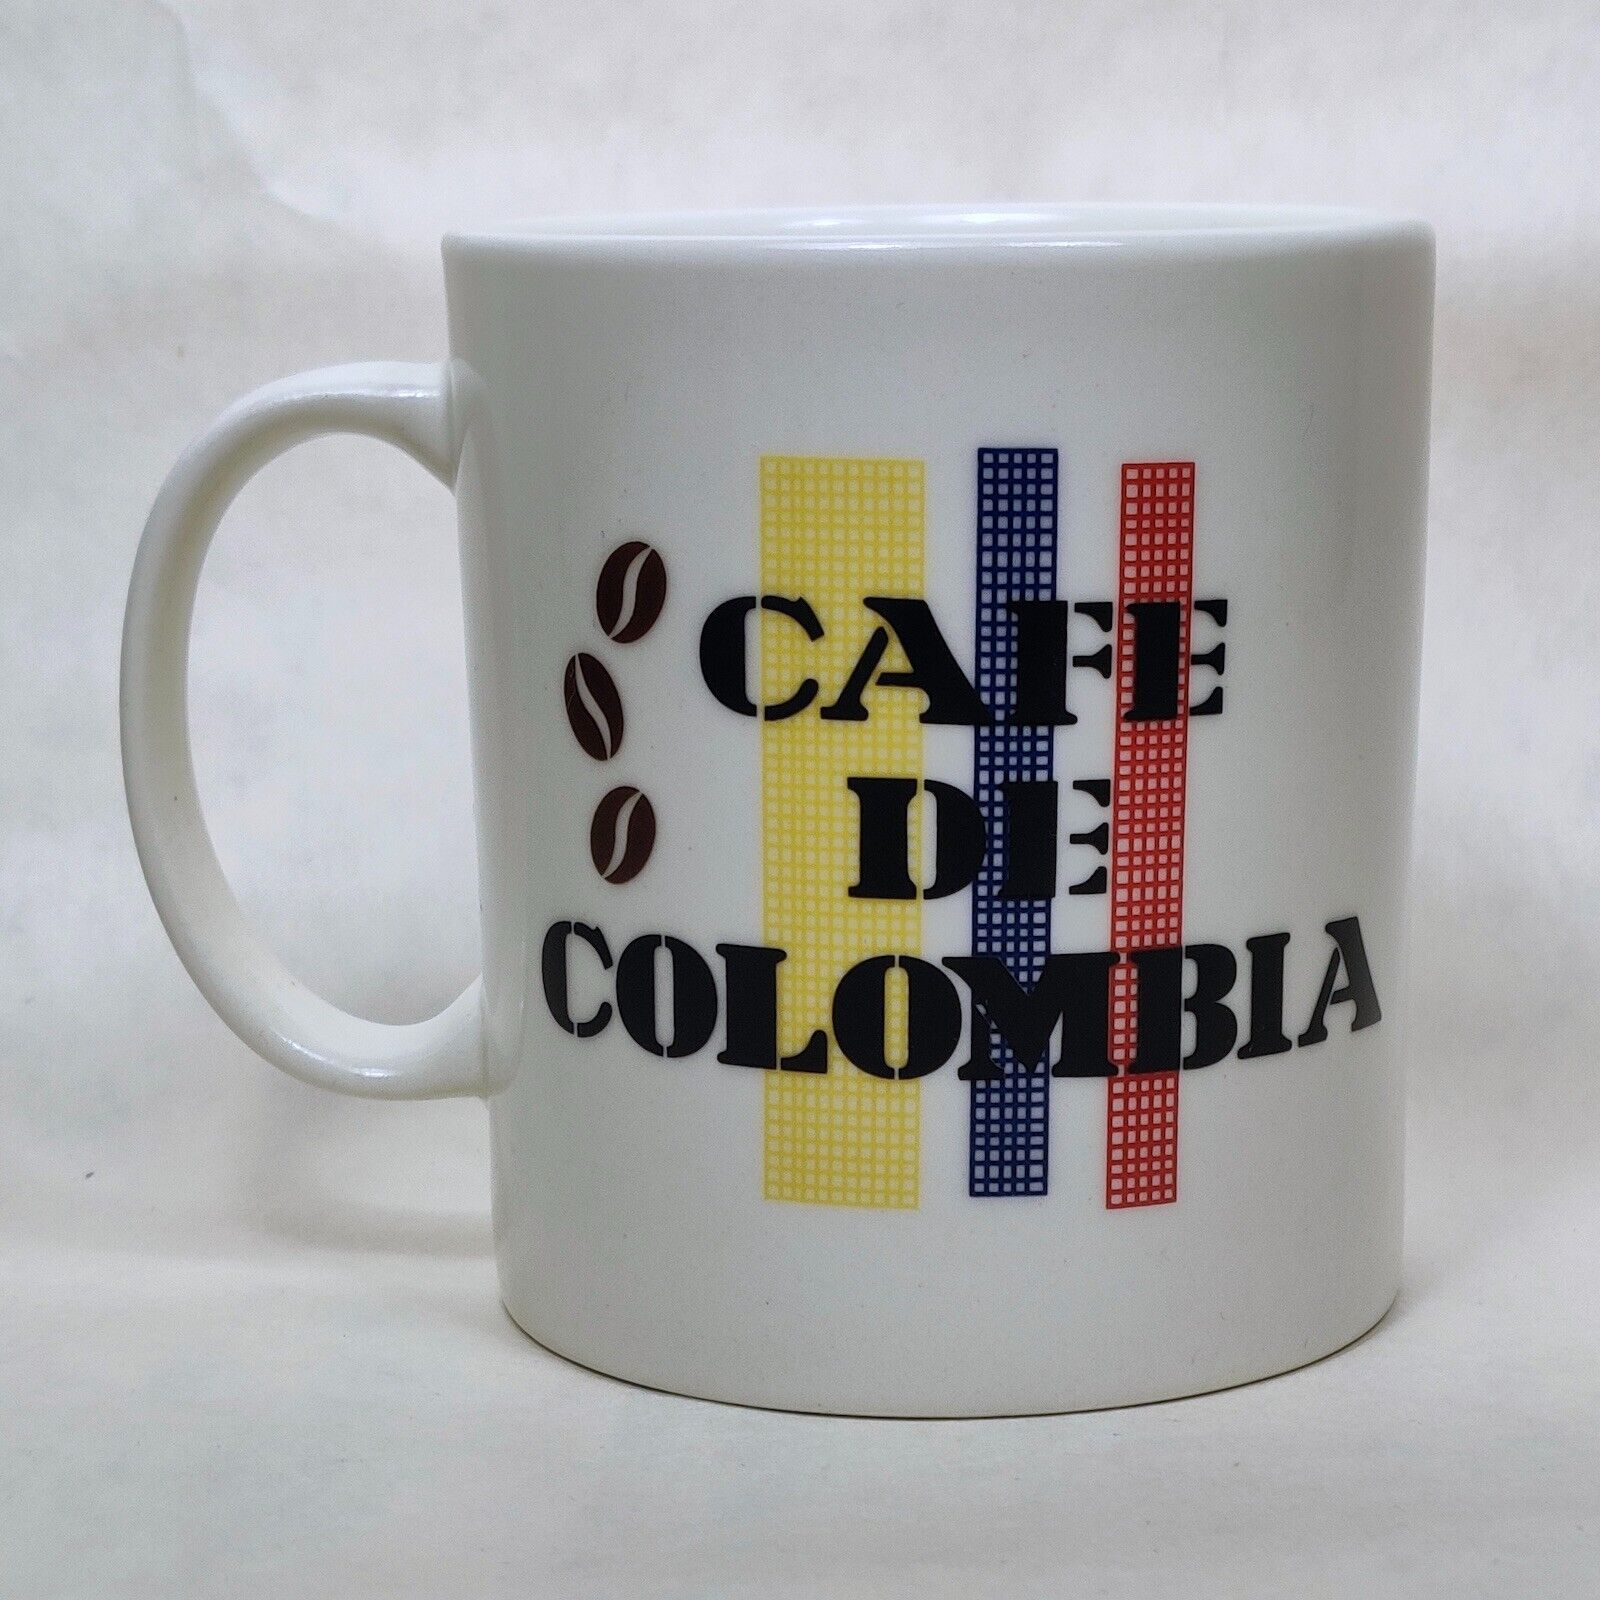 Corona Cafe de Colombia Mug Coffee Beans Cup Ceramic White 11 oz